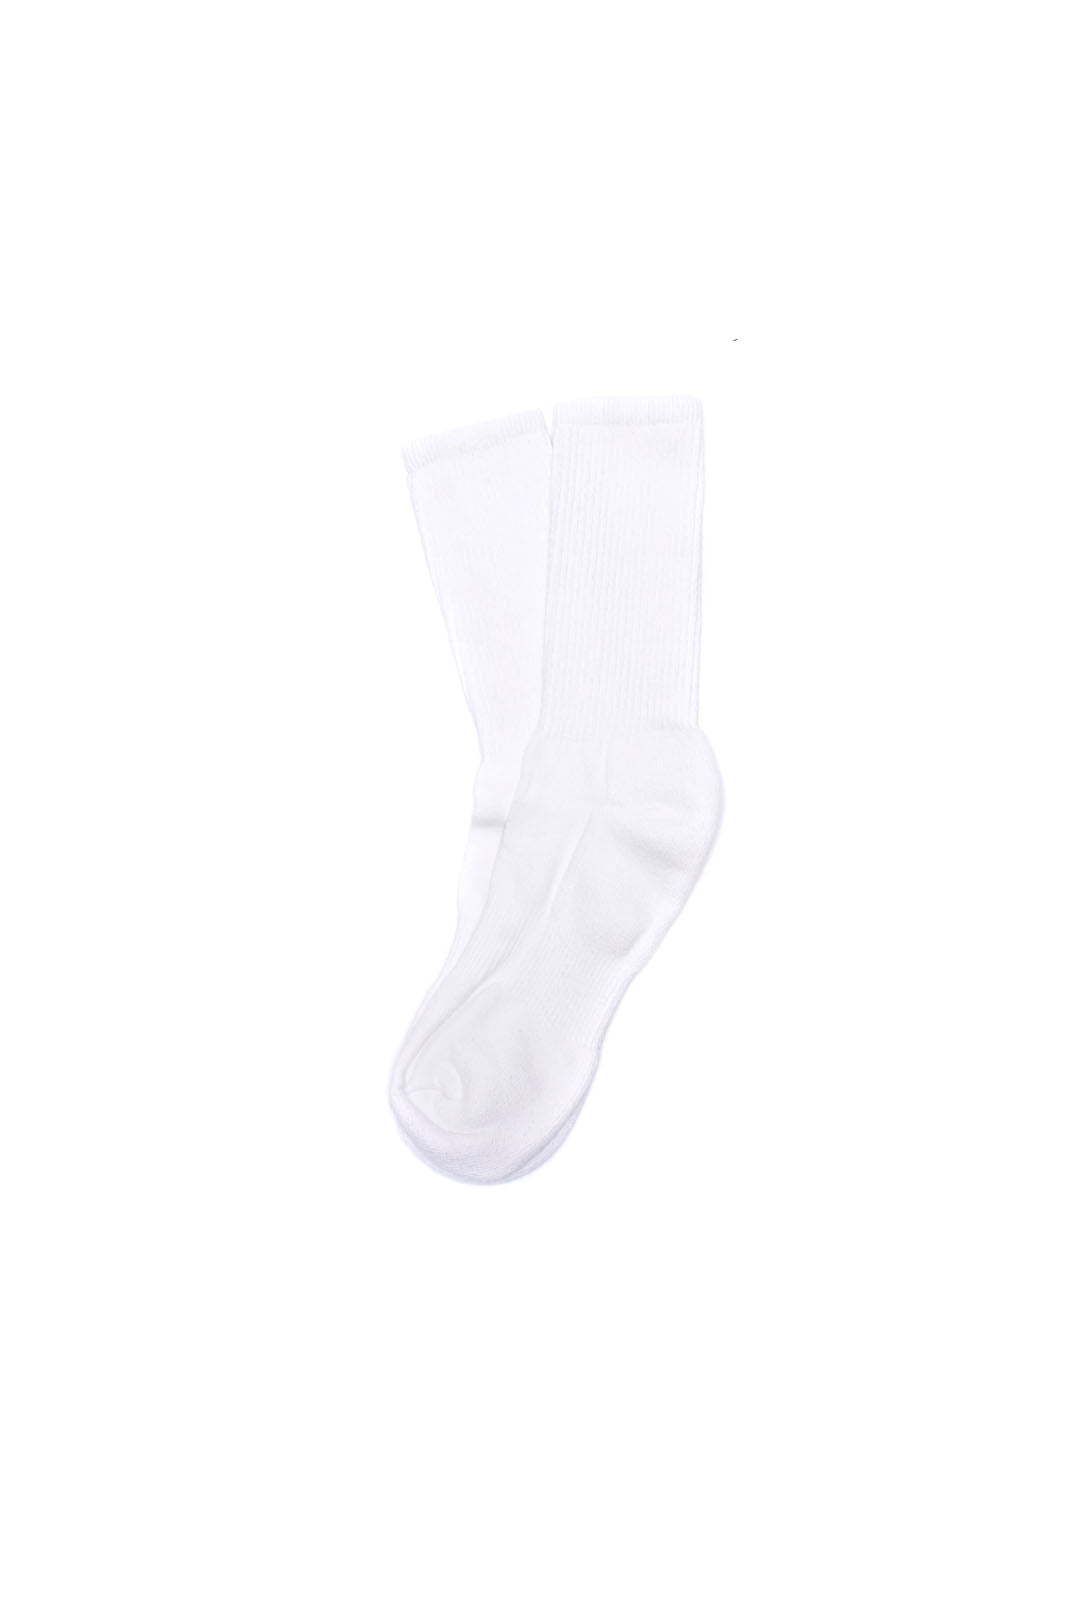 Mil-Spec Sport Sock - White